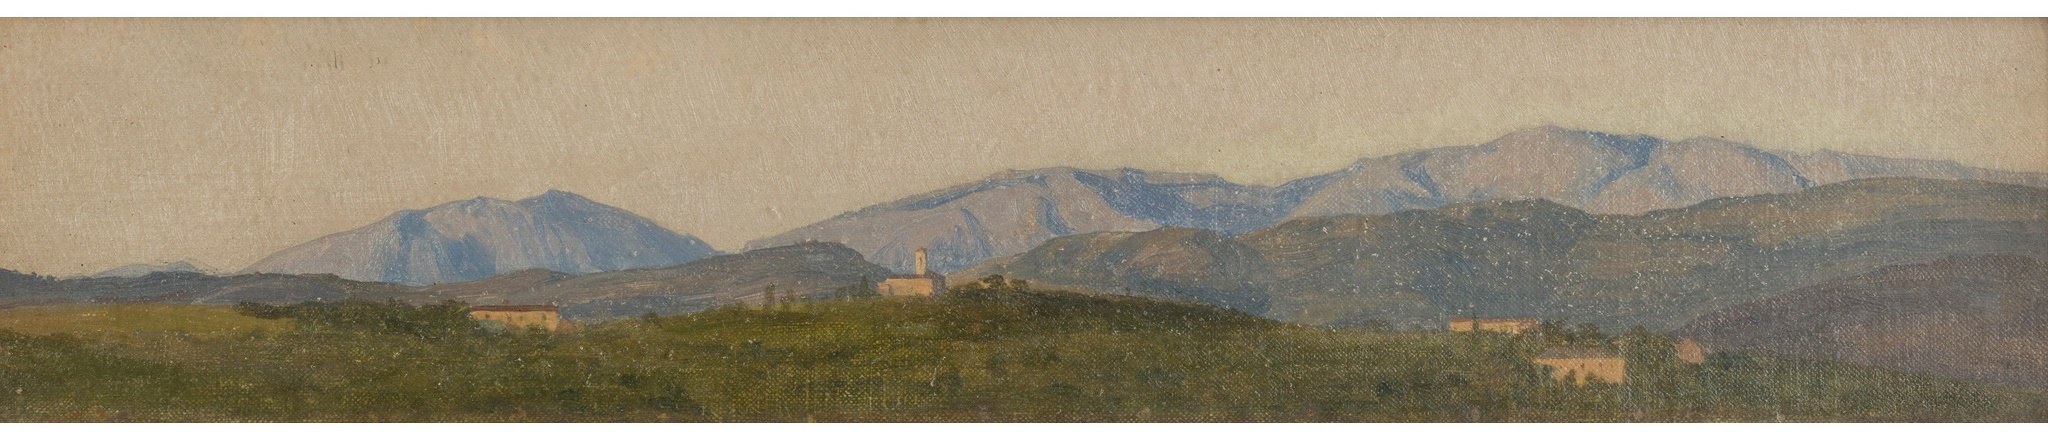 MATTHEW RIDLEY CORBET (BRITISH 1850-1902) THE MOUNTAINS OF URBINO FROM PERUGIA